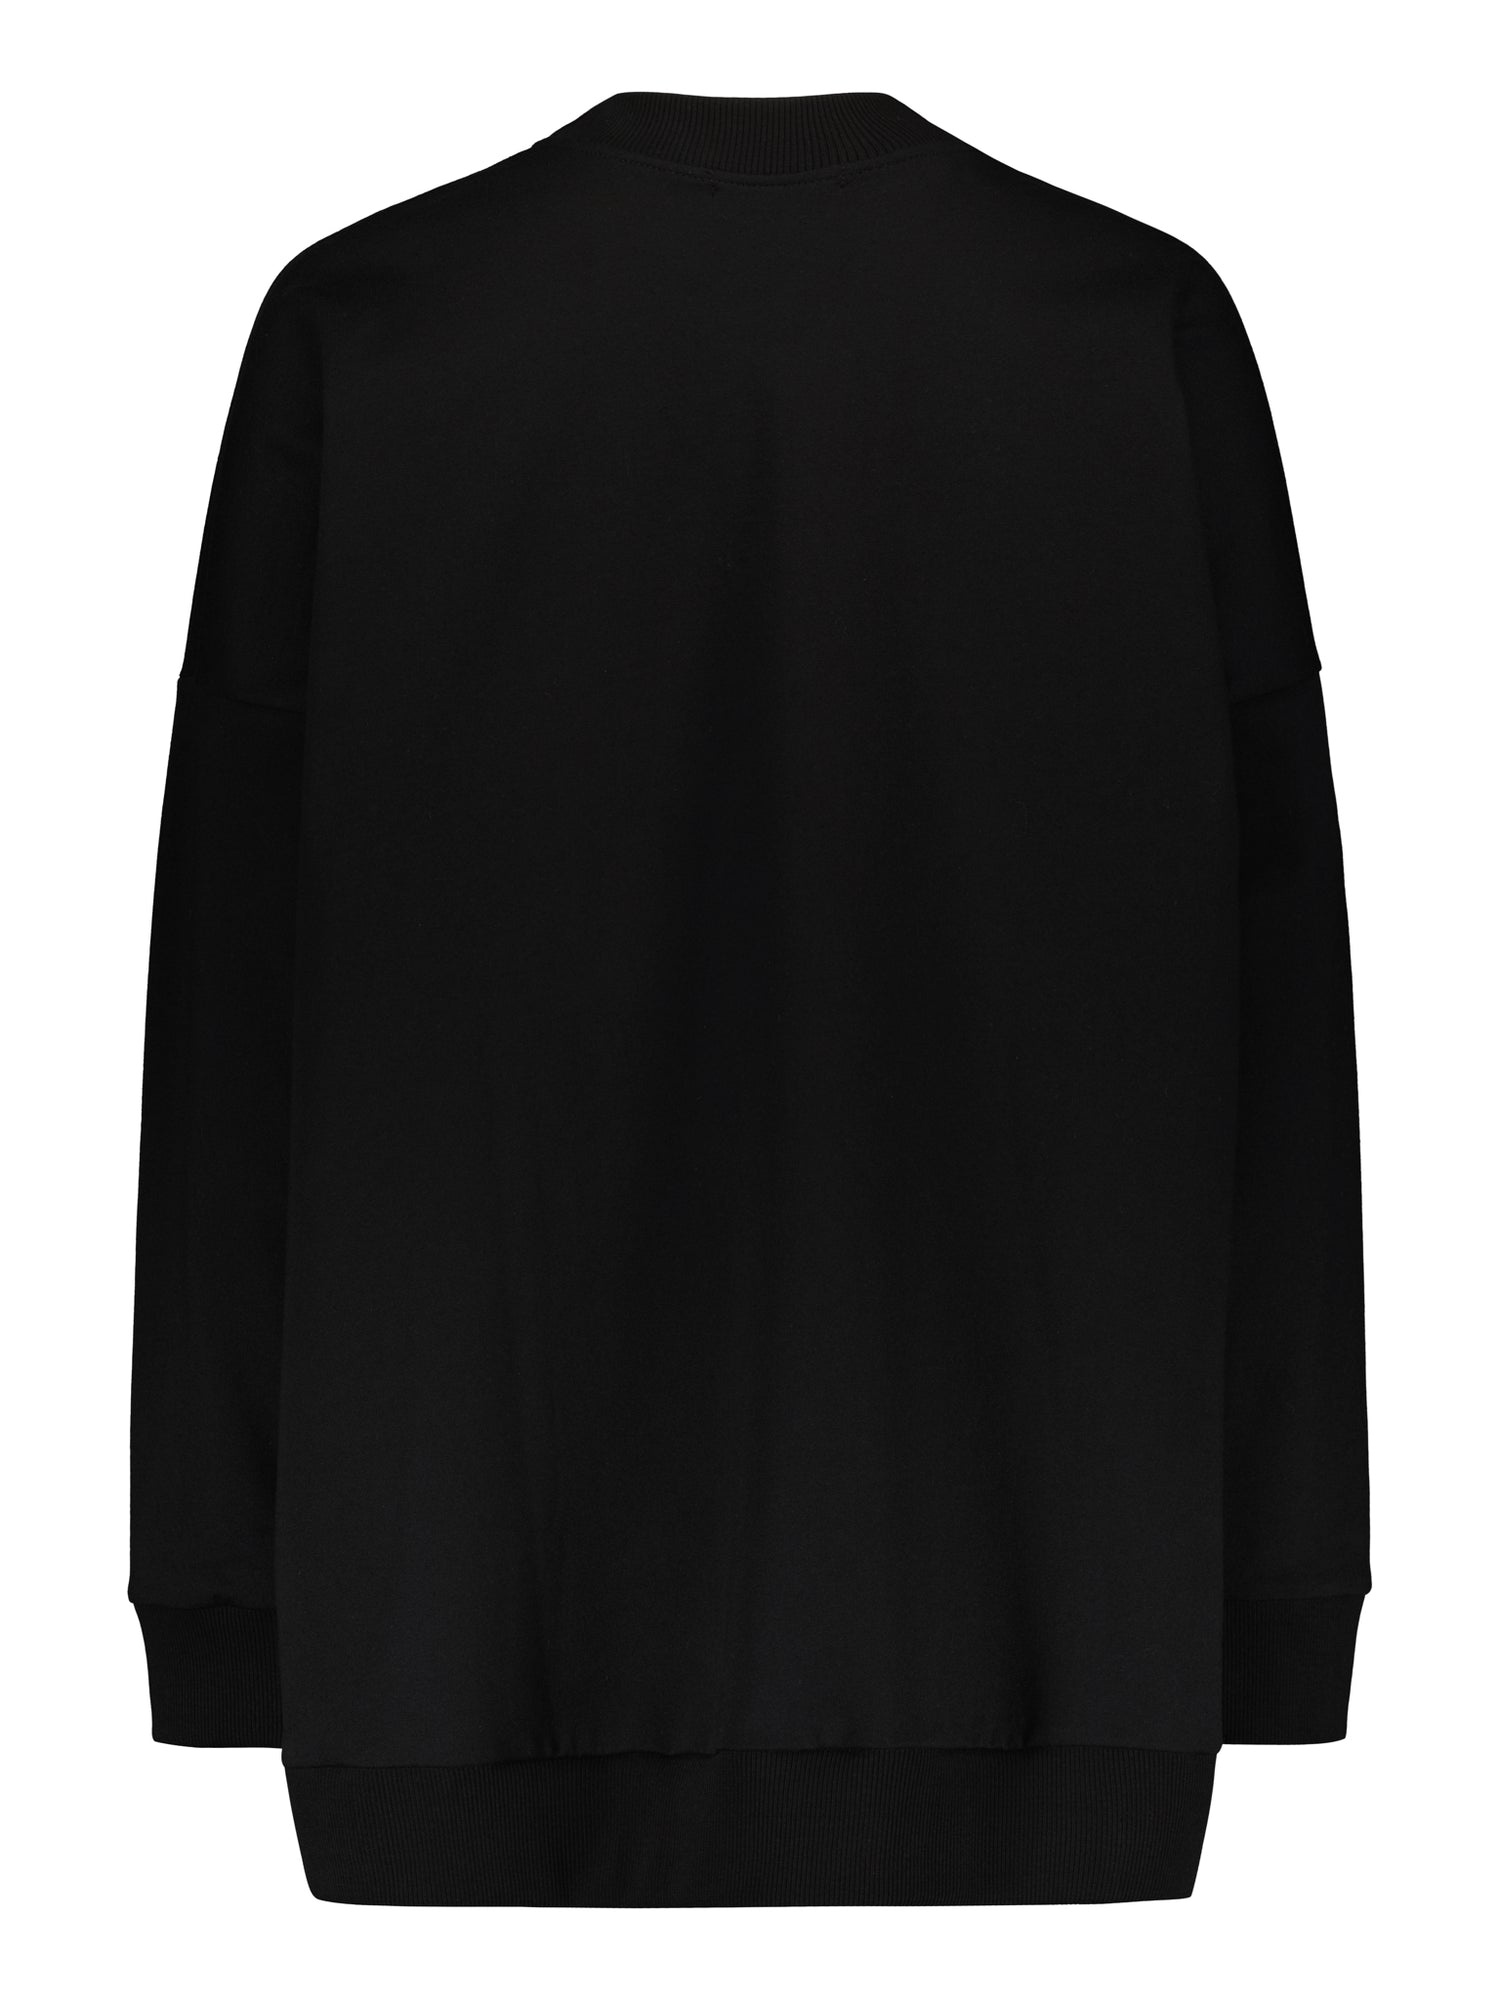 Mystic Oversize Sweatshirt, Black